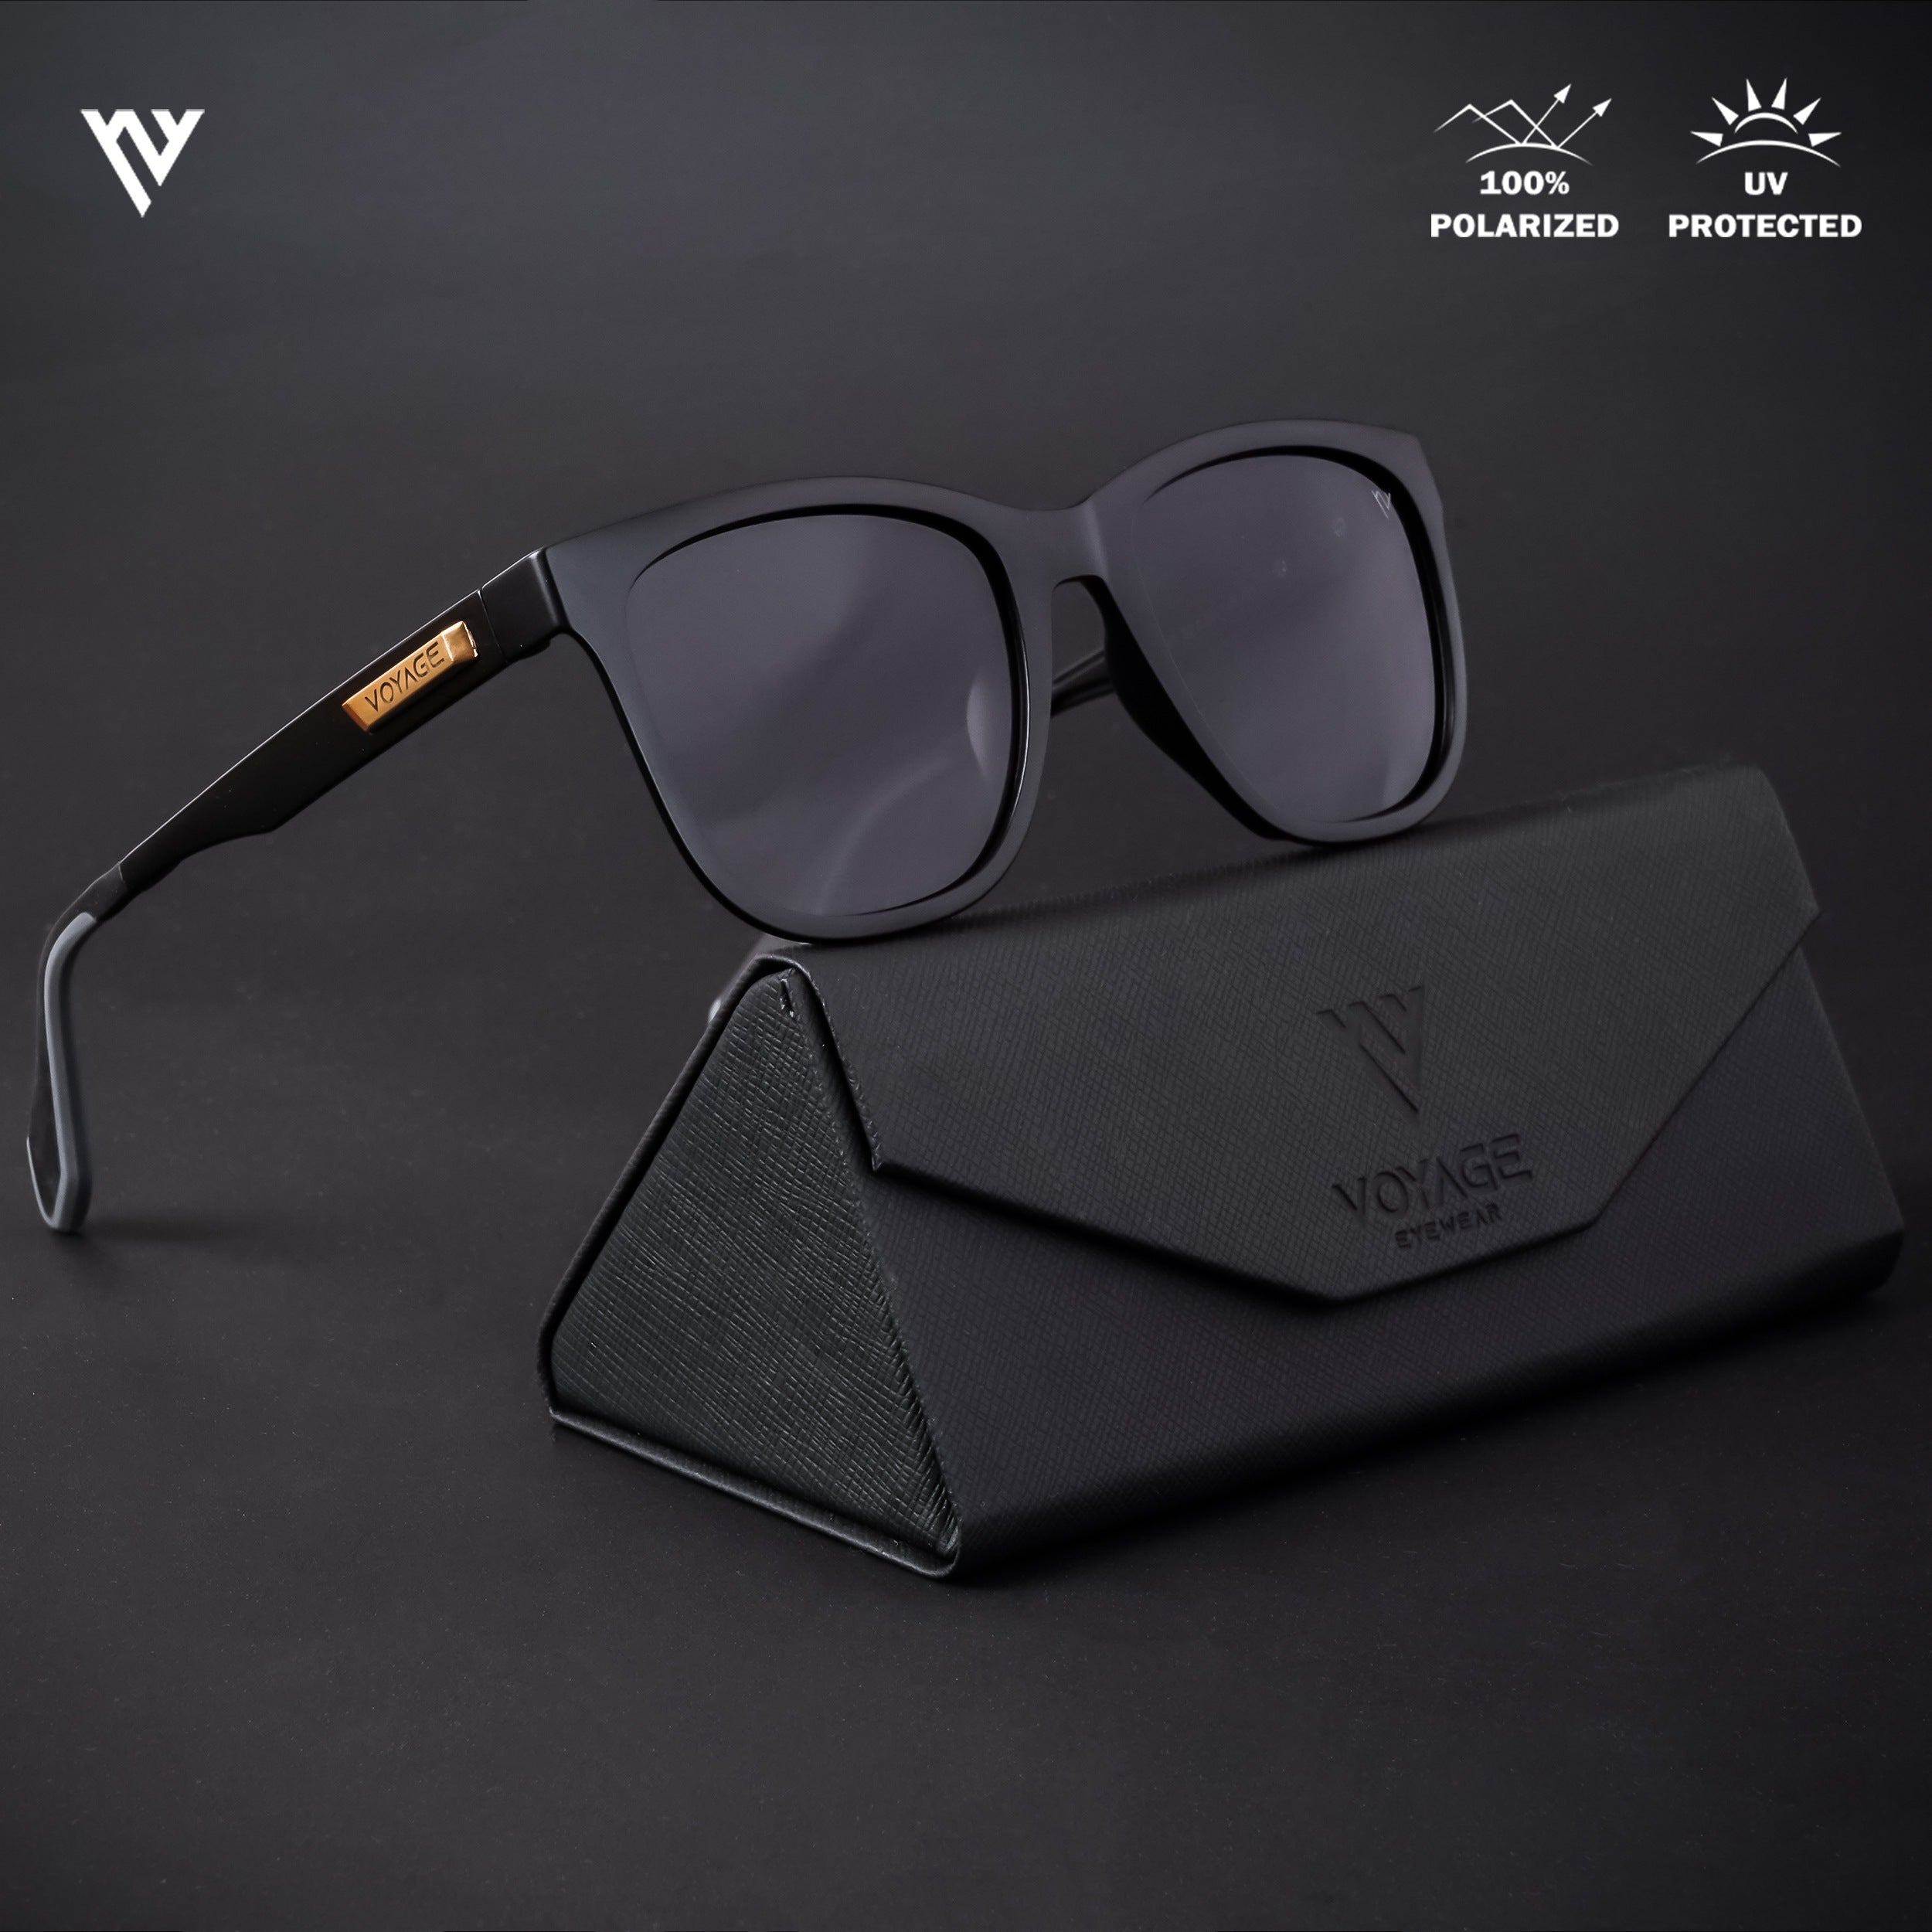 Voyage Active Matt Black Polarized Wayfarer Sunglasses for Men & Women - PMG4465